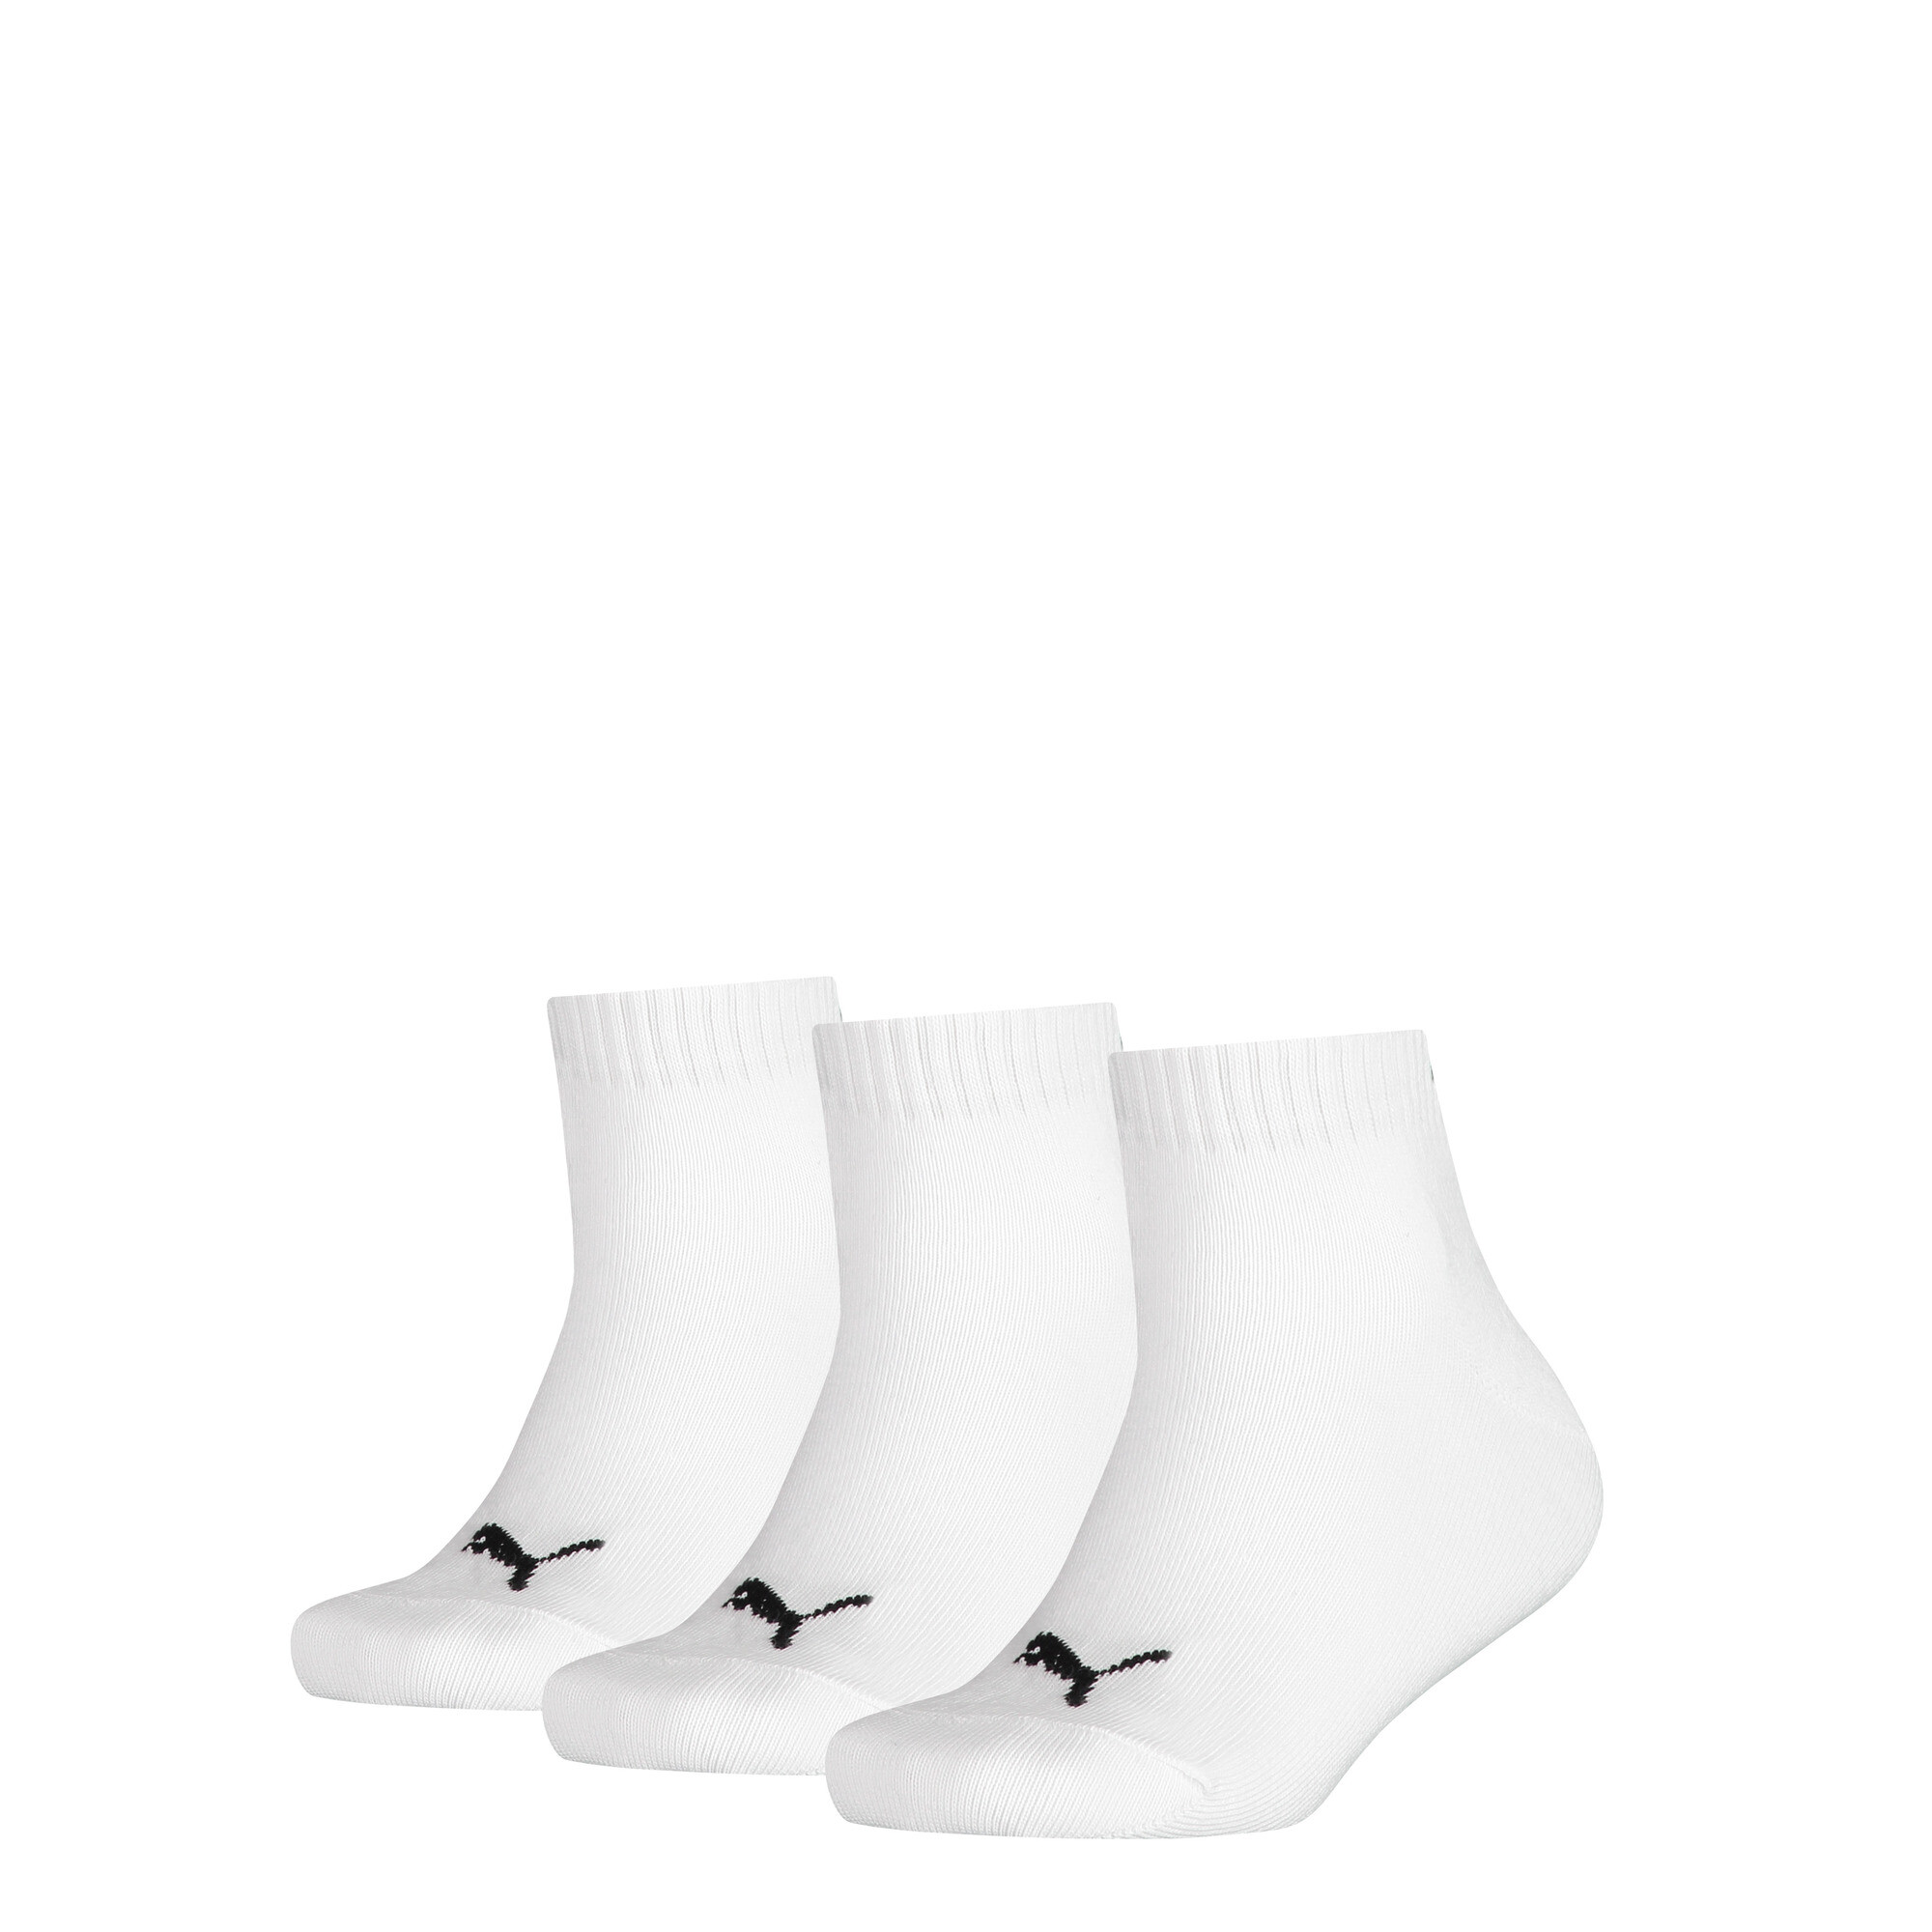 Kids' PUMA Quarter Socks 3 Pack In White, Size 27-30